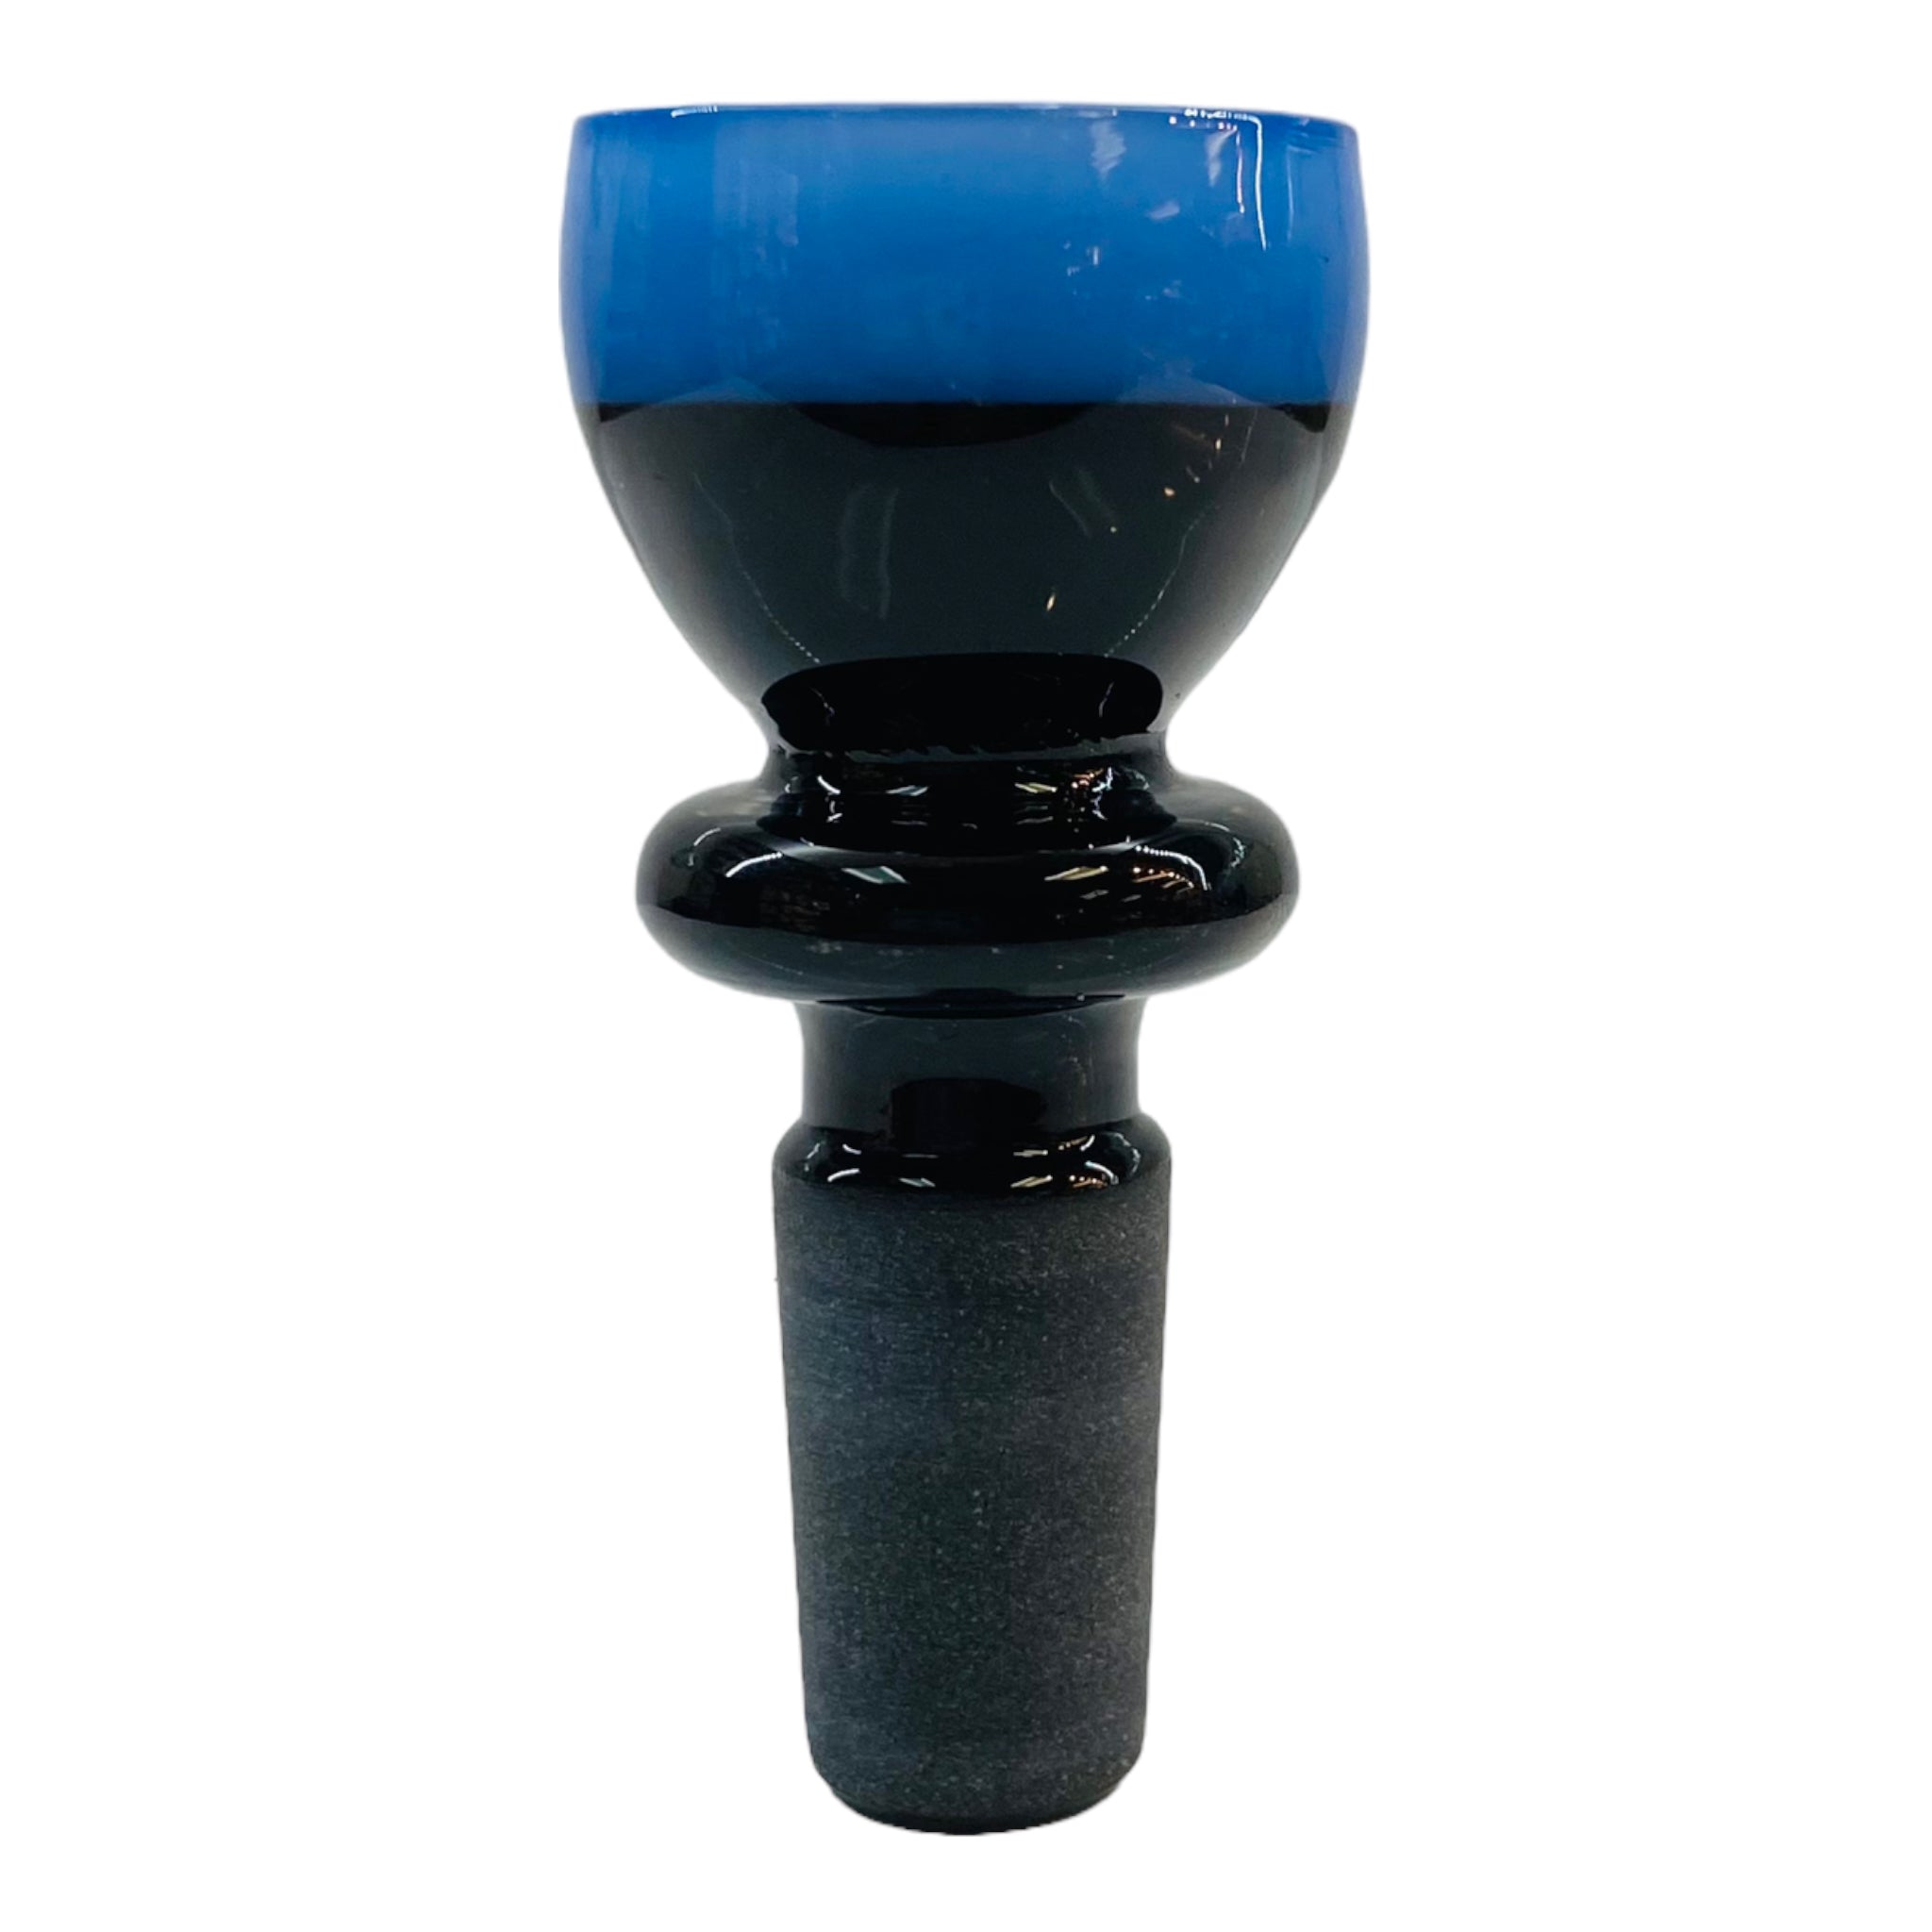 14mm Flower Bowl - Black Fitting With Color Rim - Blue